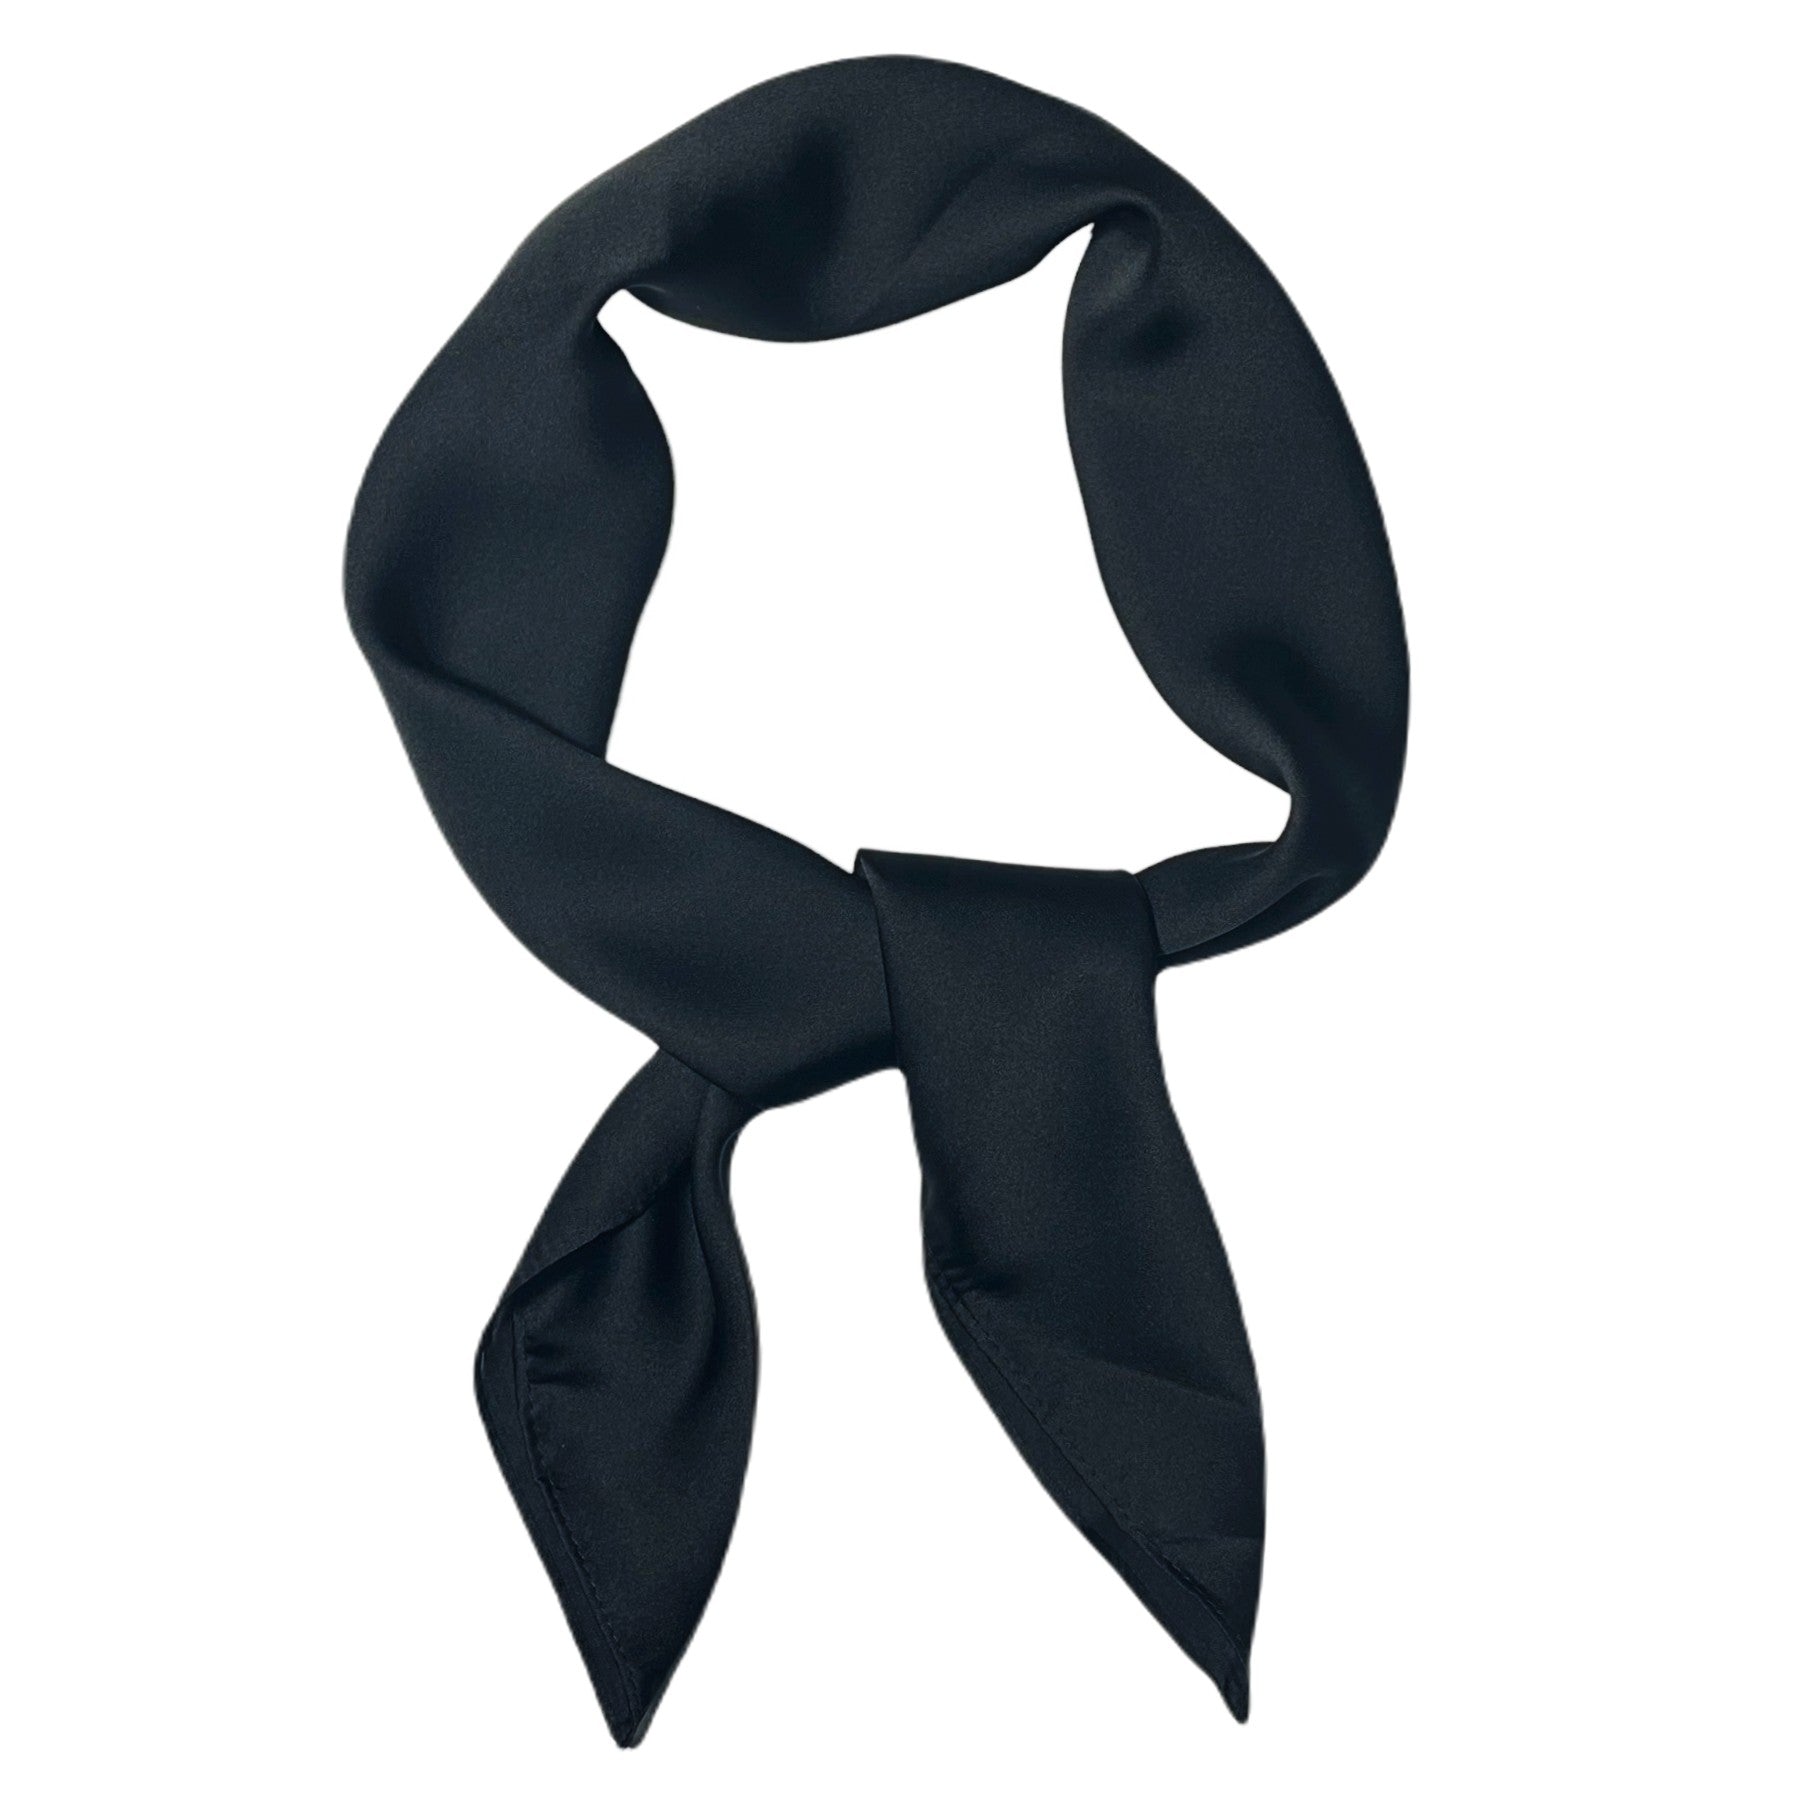 Square silk scarf 70 x 70 cm by WESTEND CHOICE Scarves & Shawls all scarves, men, silk scarves, square silk scarf, women